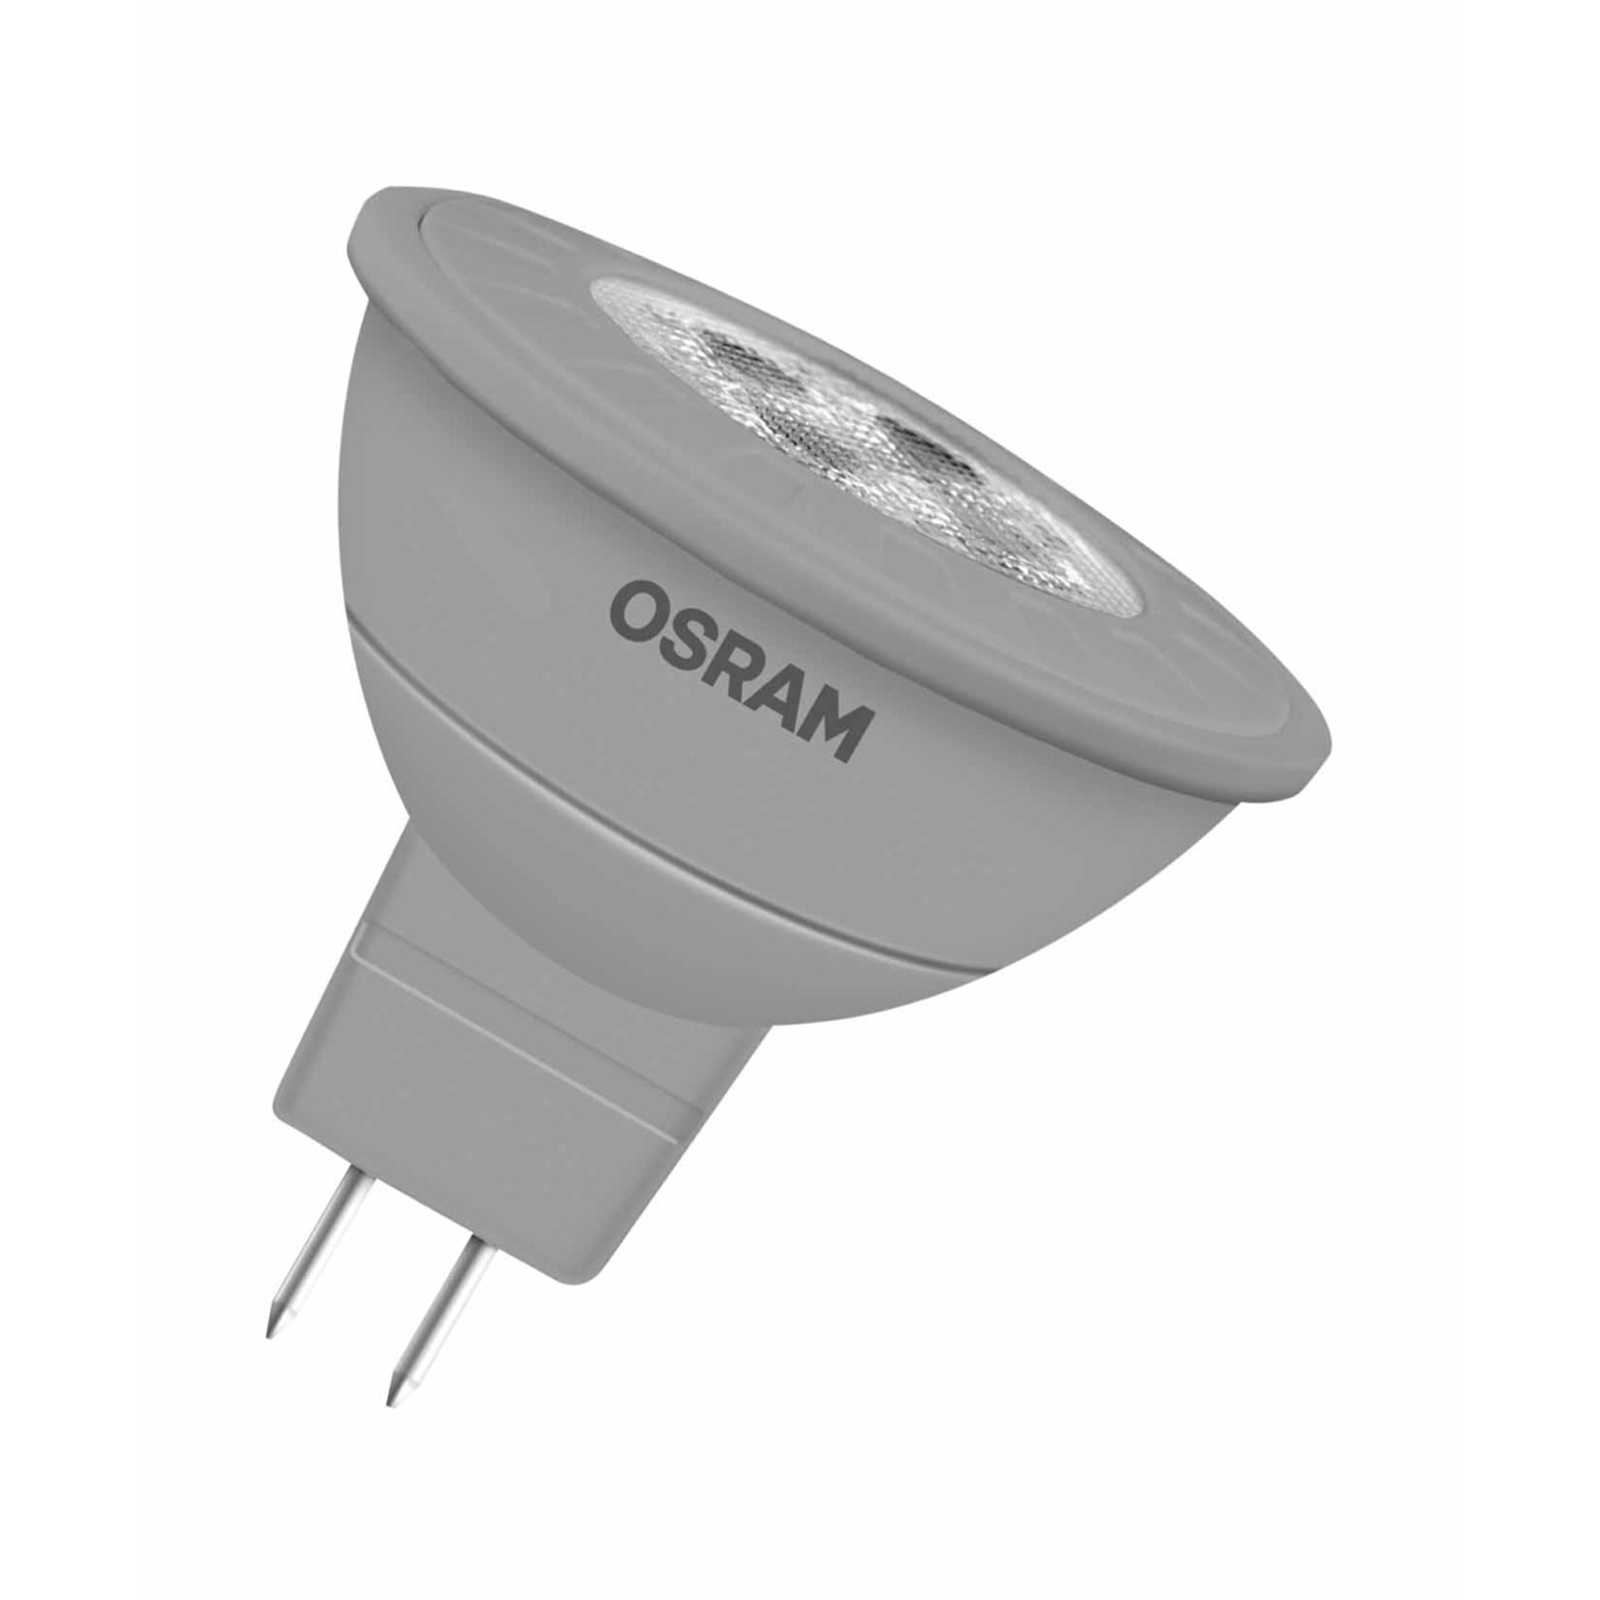 Osram 5W LED Daylight Dimmable MR16 Globe